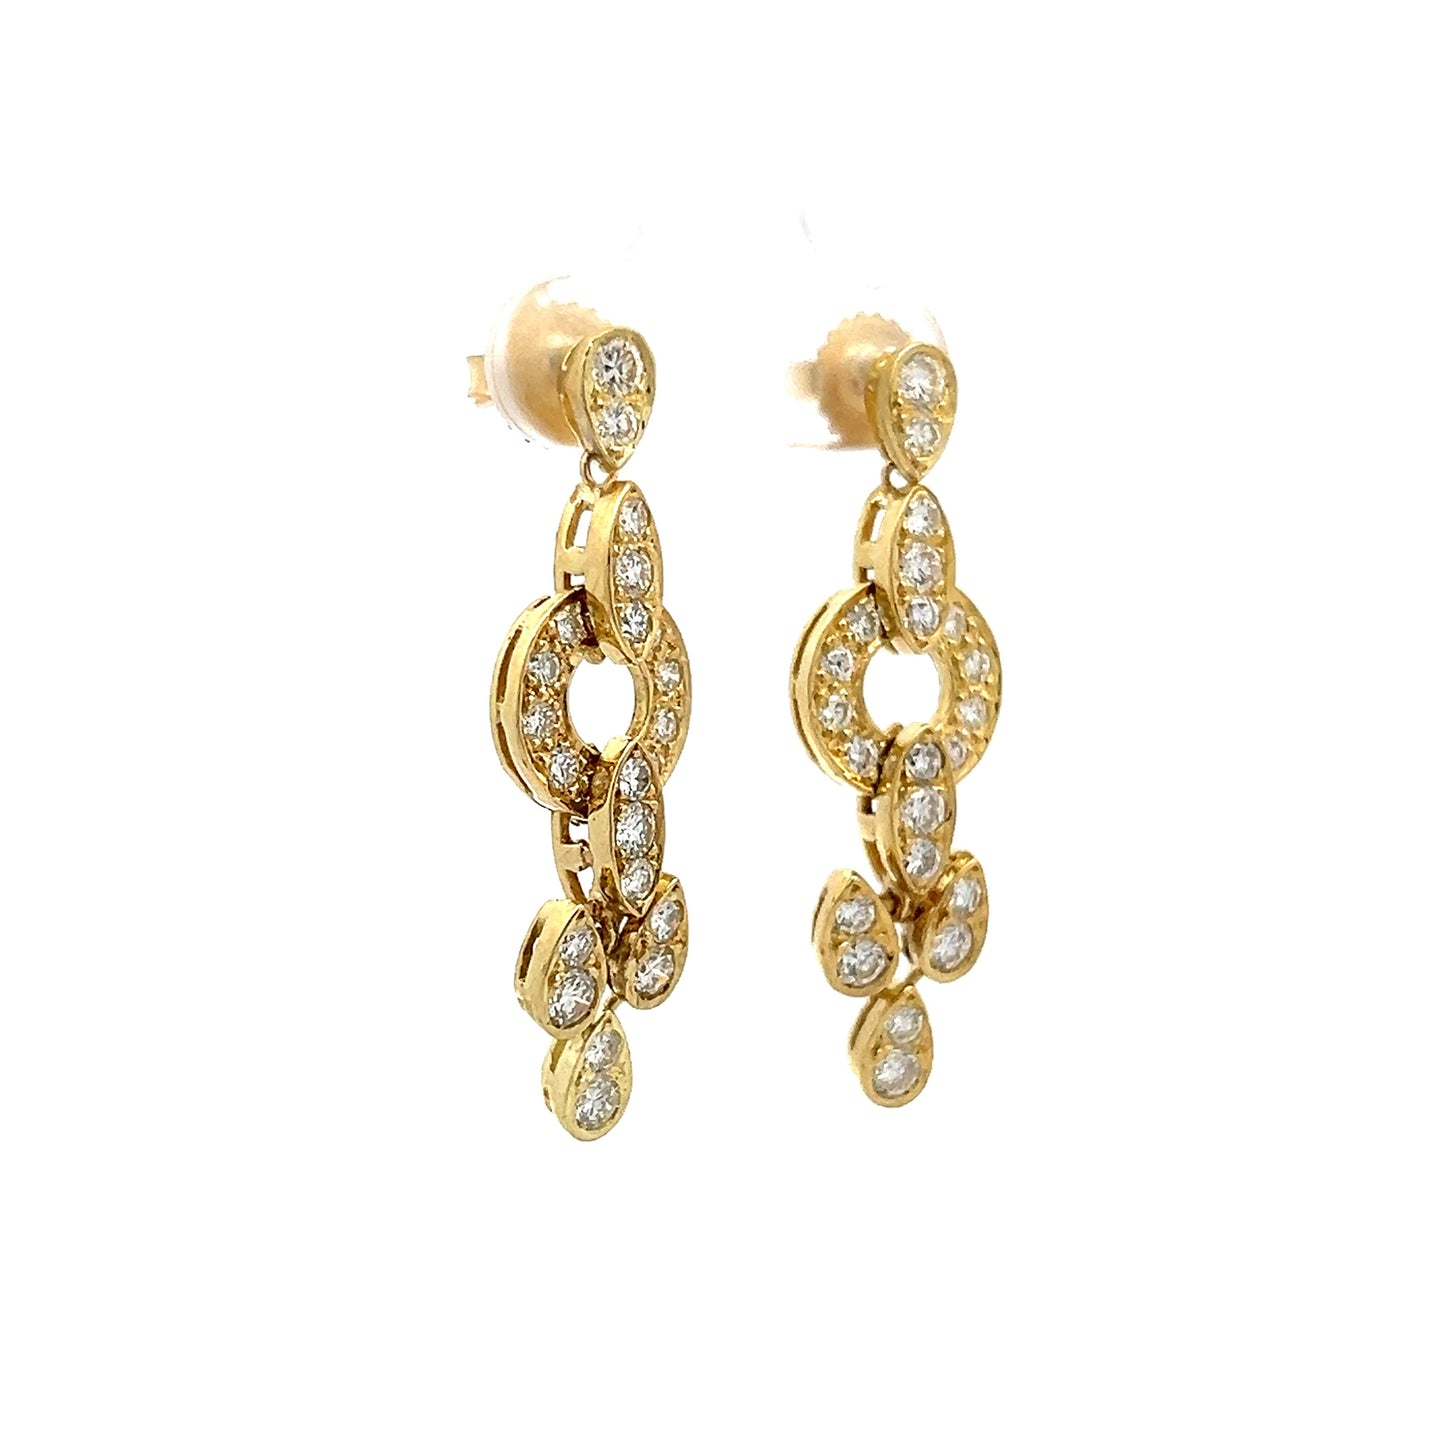 1.92 Diamond Drop Earrings in 14k Yellow Gold